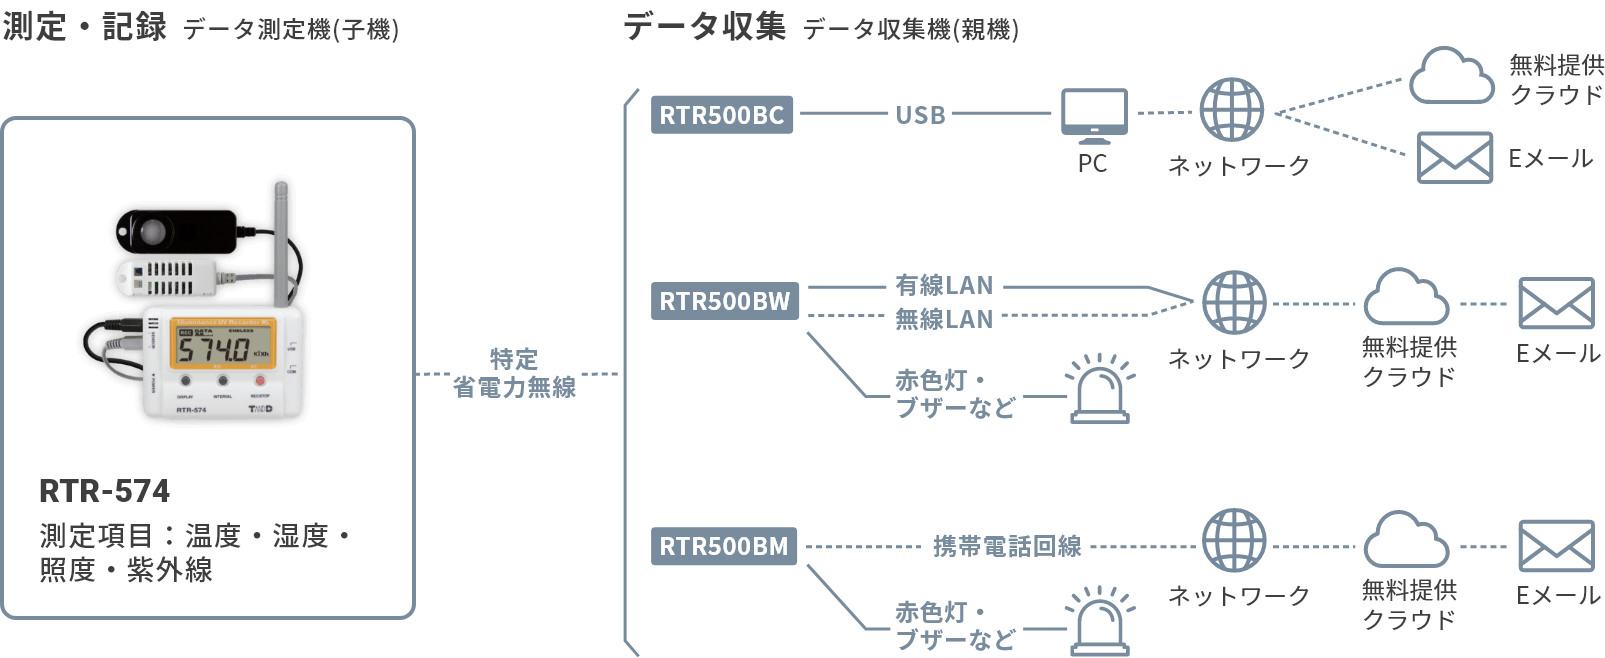 RTR-574の構成図